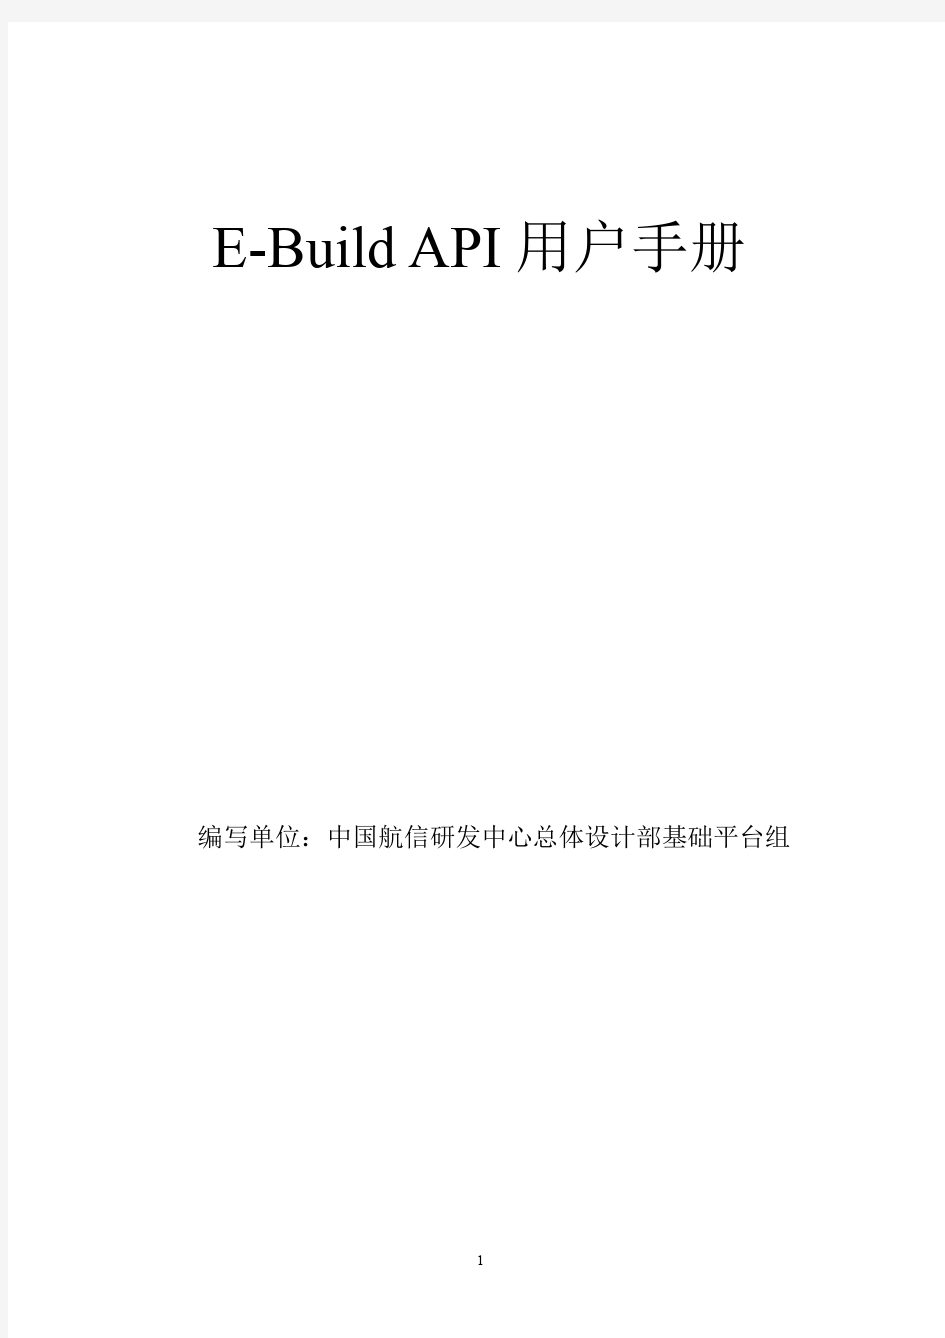 E-build_API用户手册说明